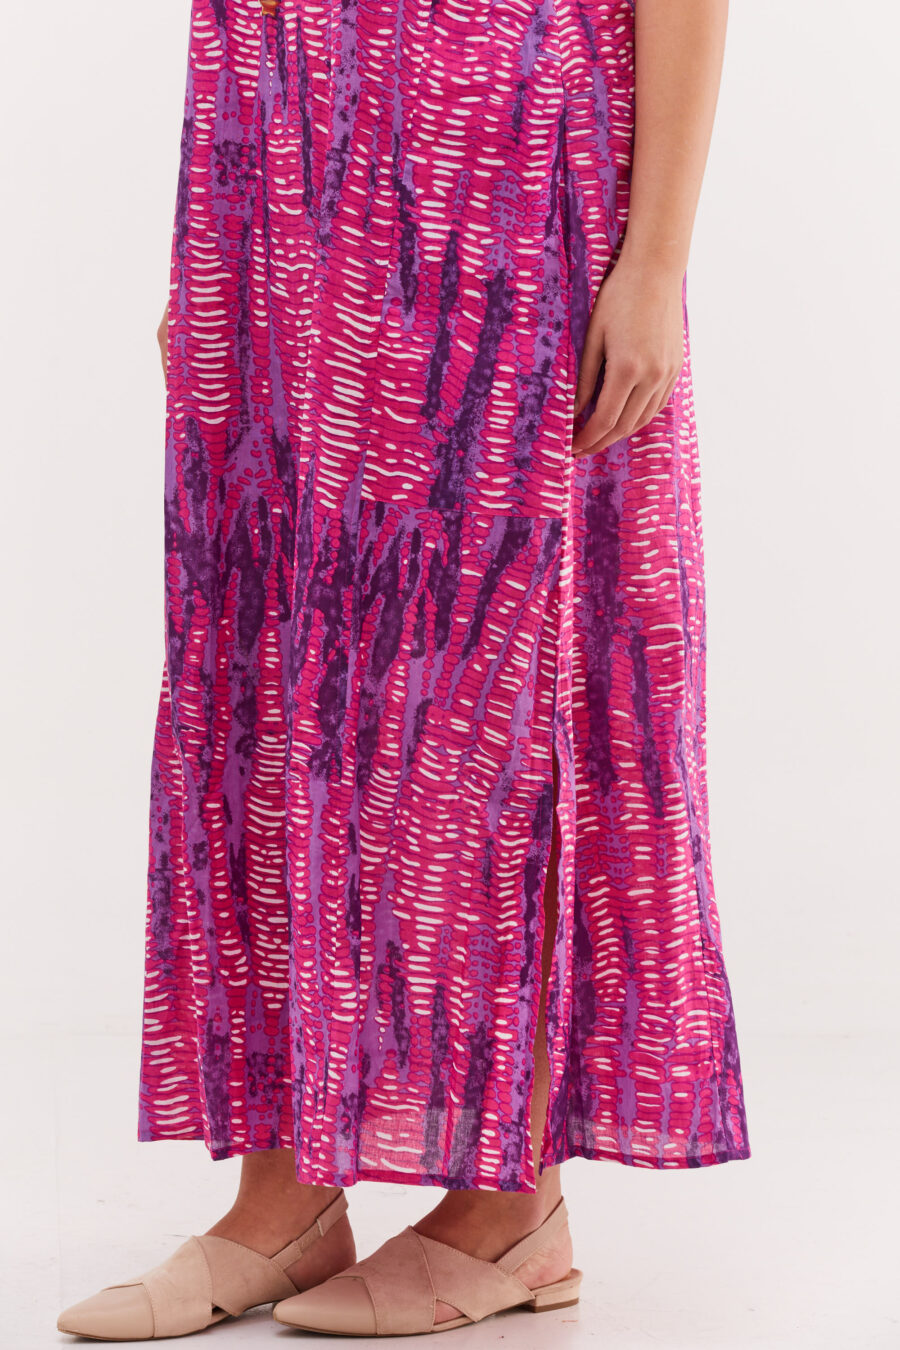 Jalabiya dress | Uniquely designed dress - Stone violet print, pink dress with violet stone-like print by comfort zone boutique